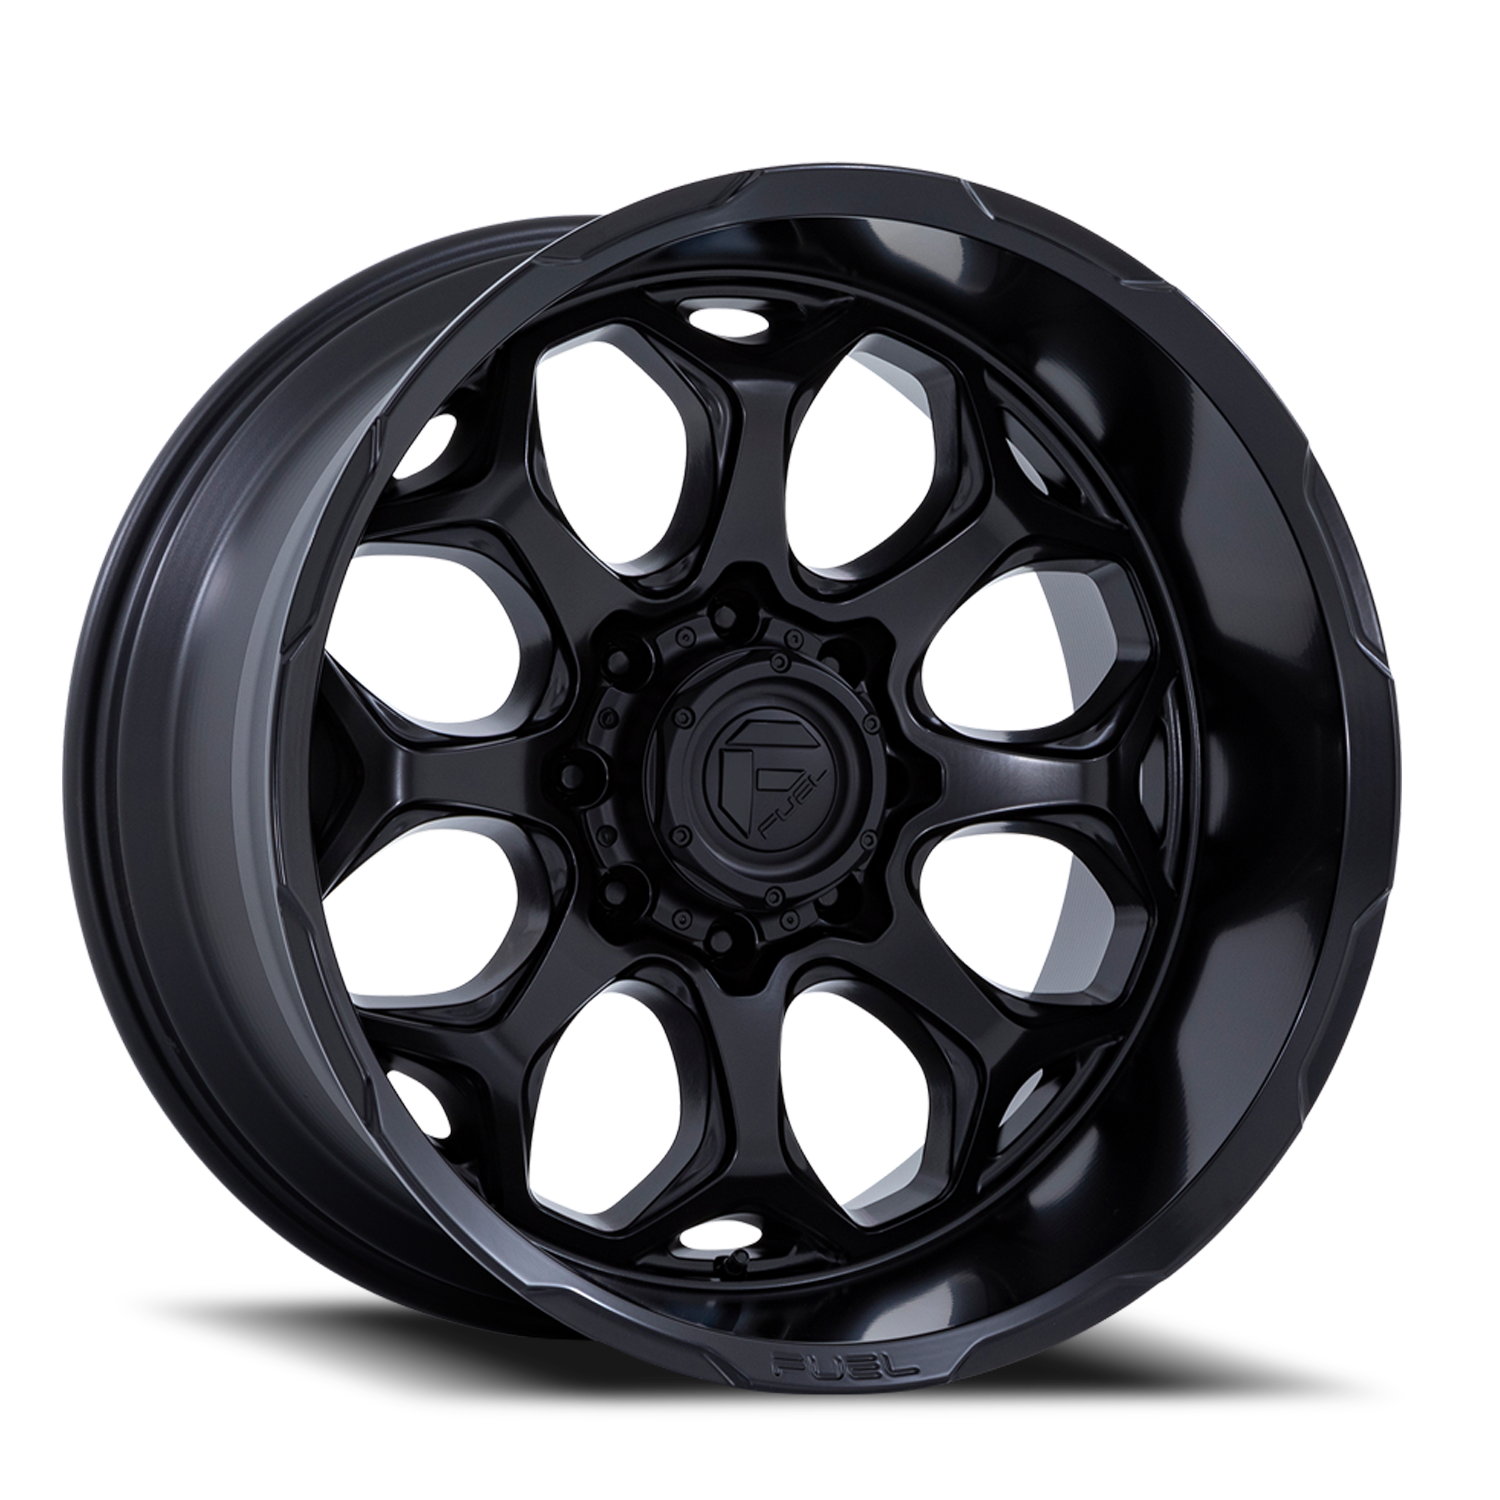 Aluminum Wheels 20X9 Scepter FC862 MX 8 On 180 Blackout 124.2 Bore 1 Offset Fuel Off Road Wheels